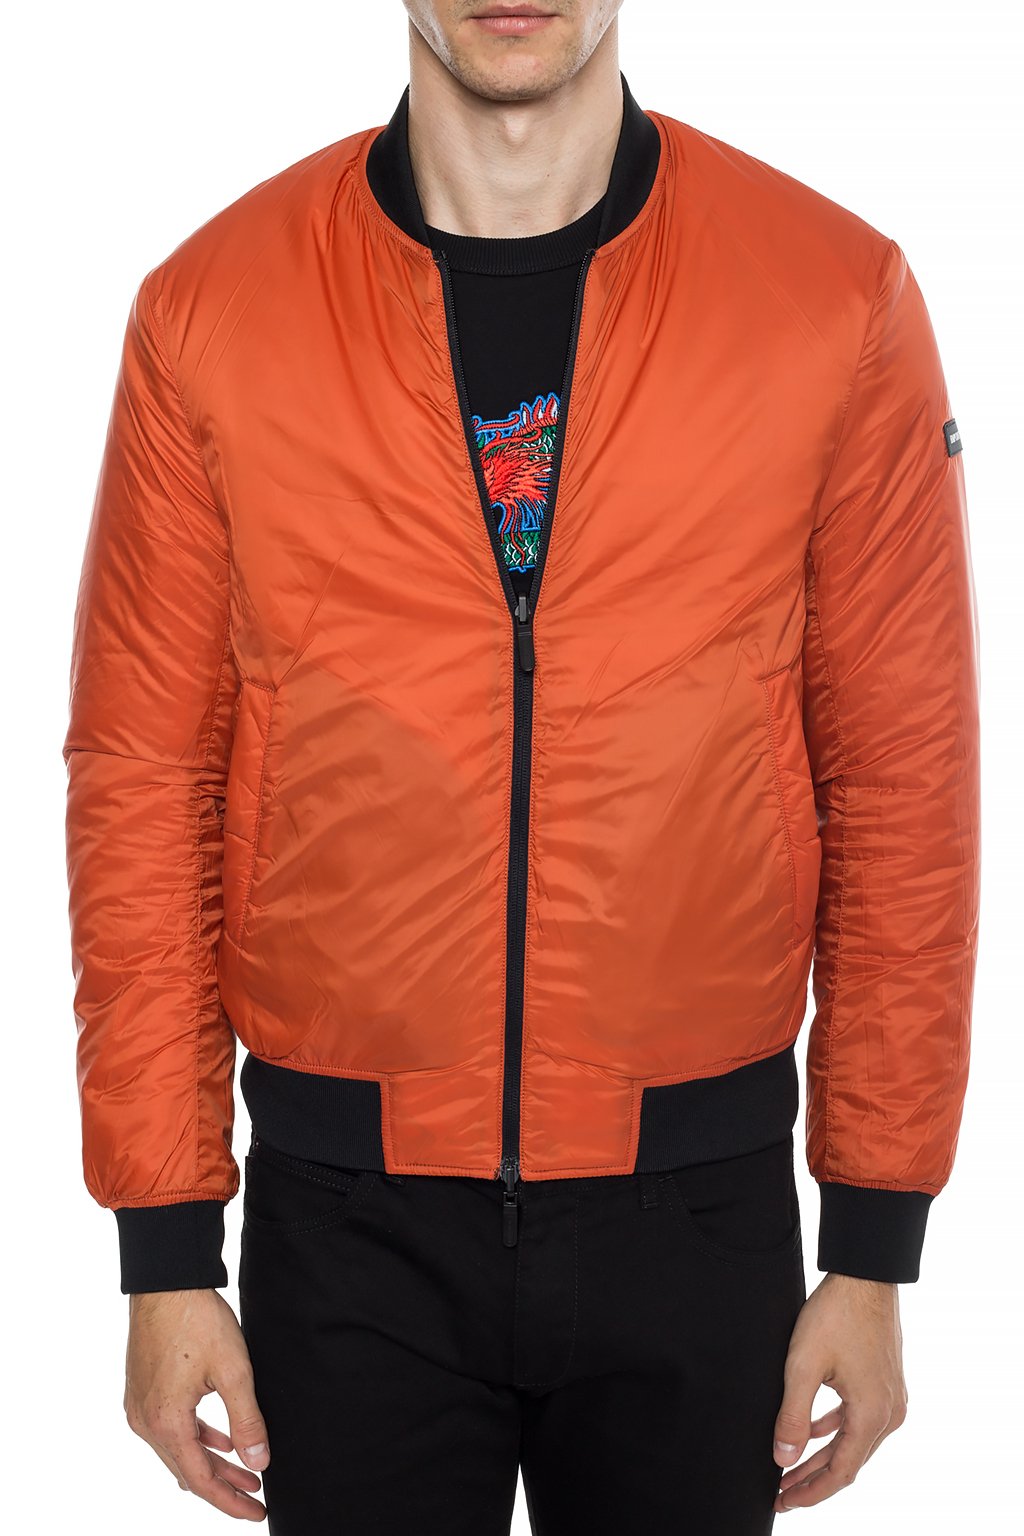 armani orange jacket